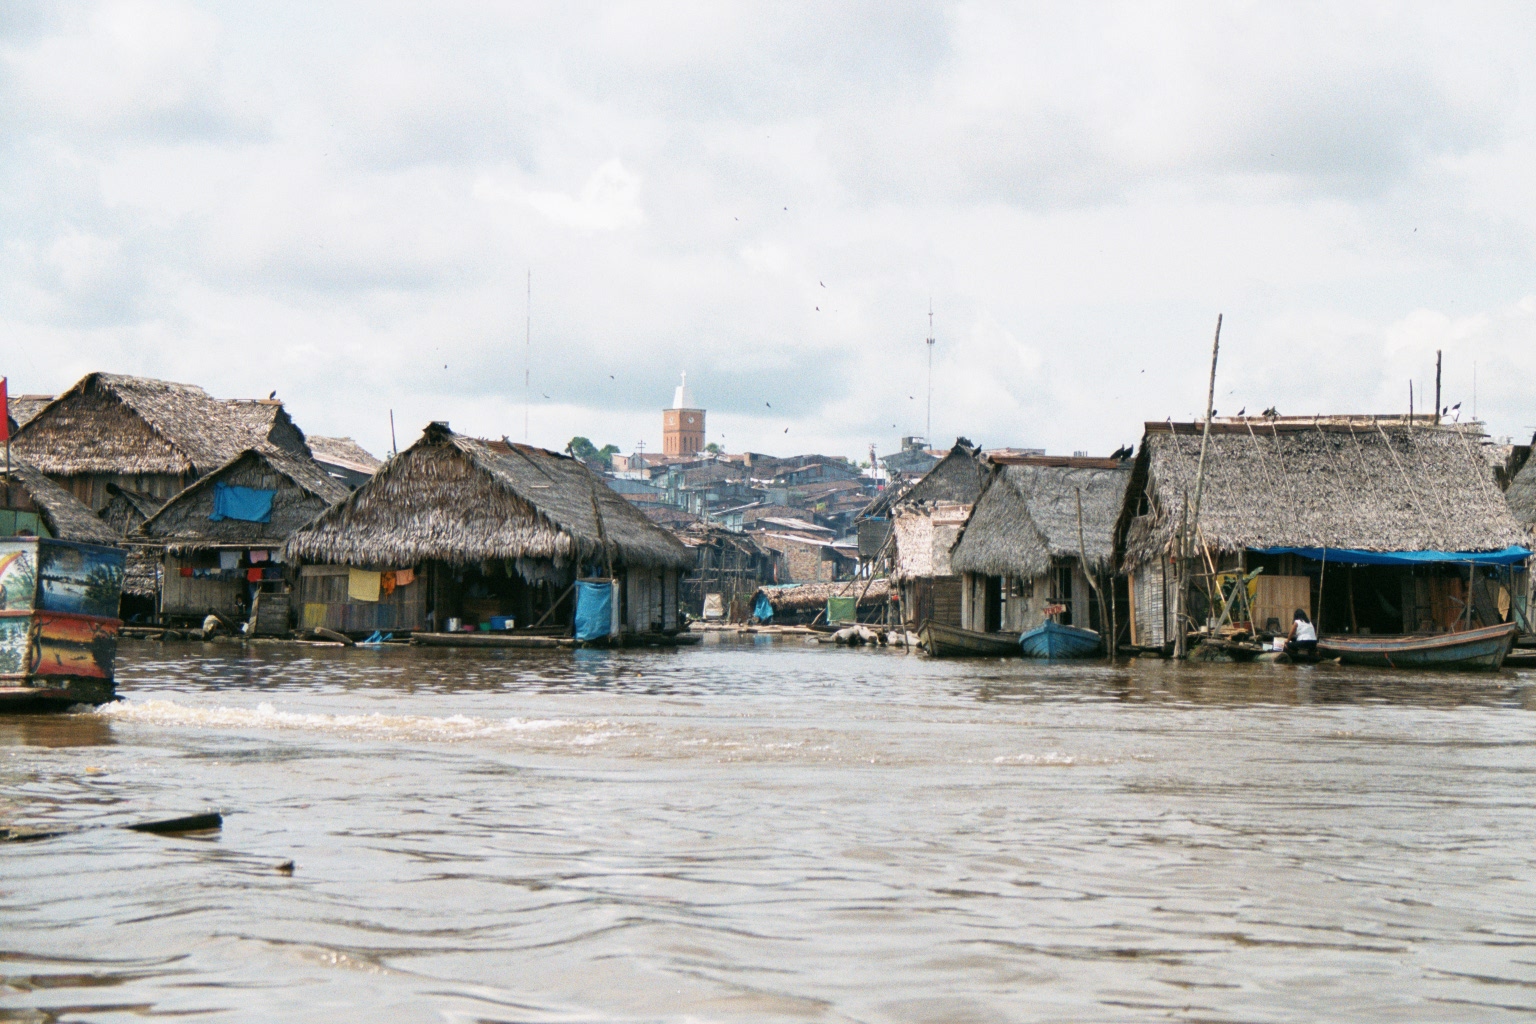 Houseboats in Iquitos, Peru  -  Feb 2002